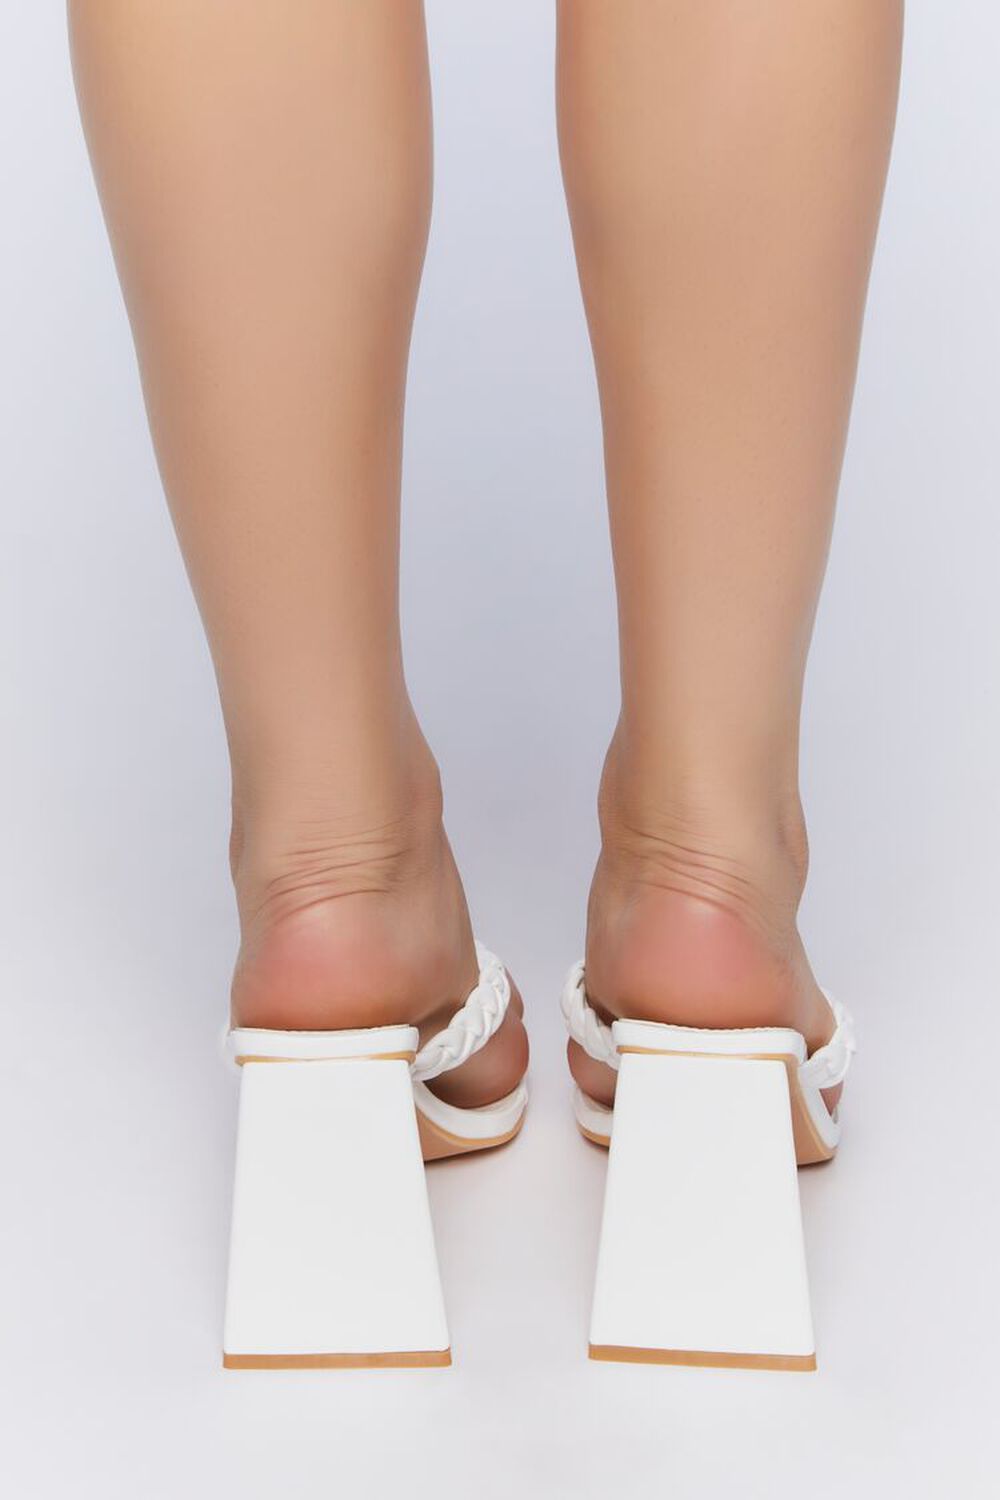 WHITE Braided Thong Heels, image 3